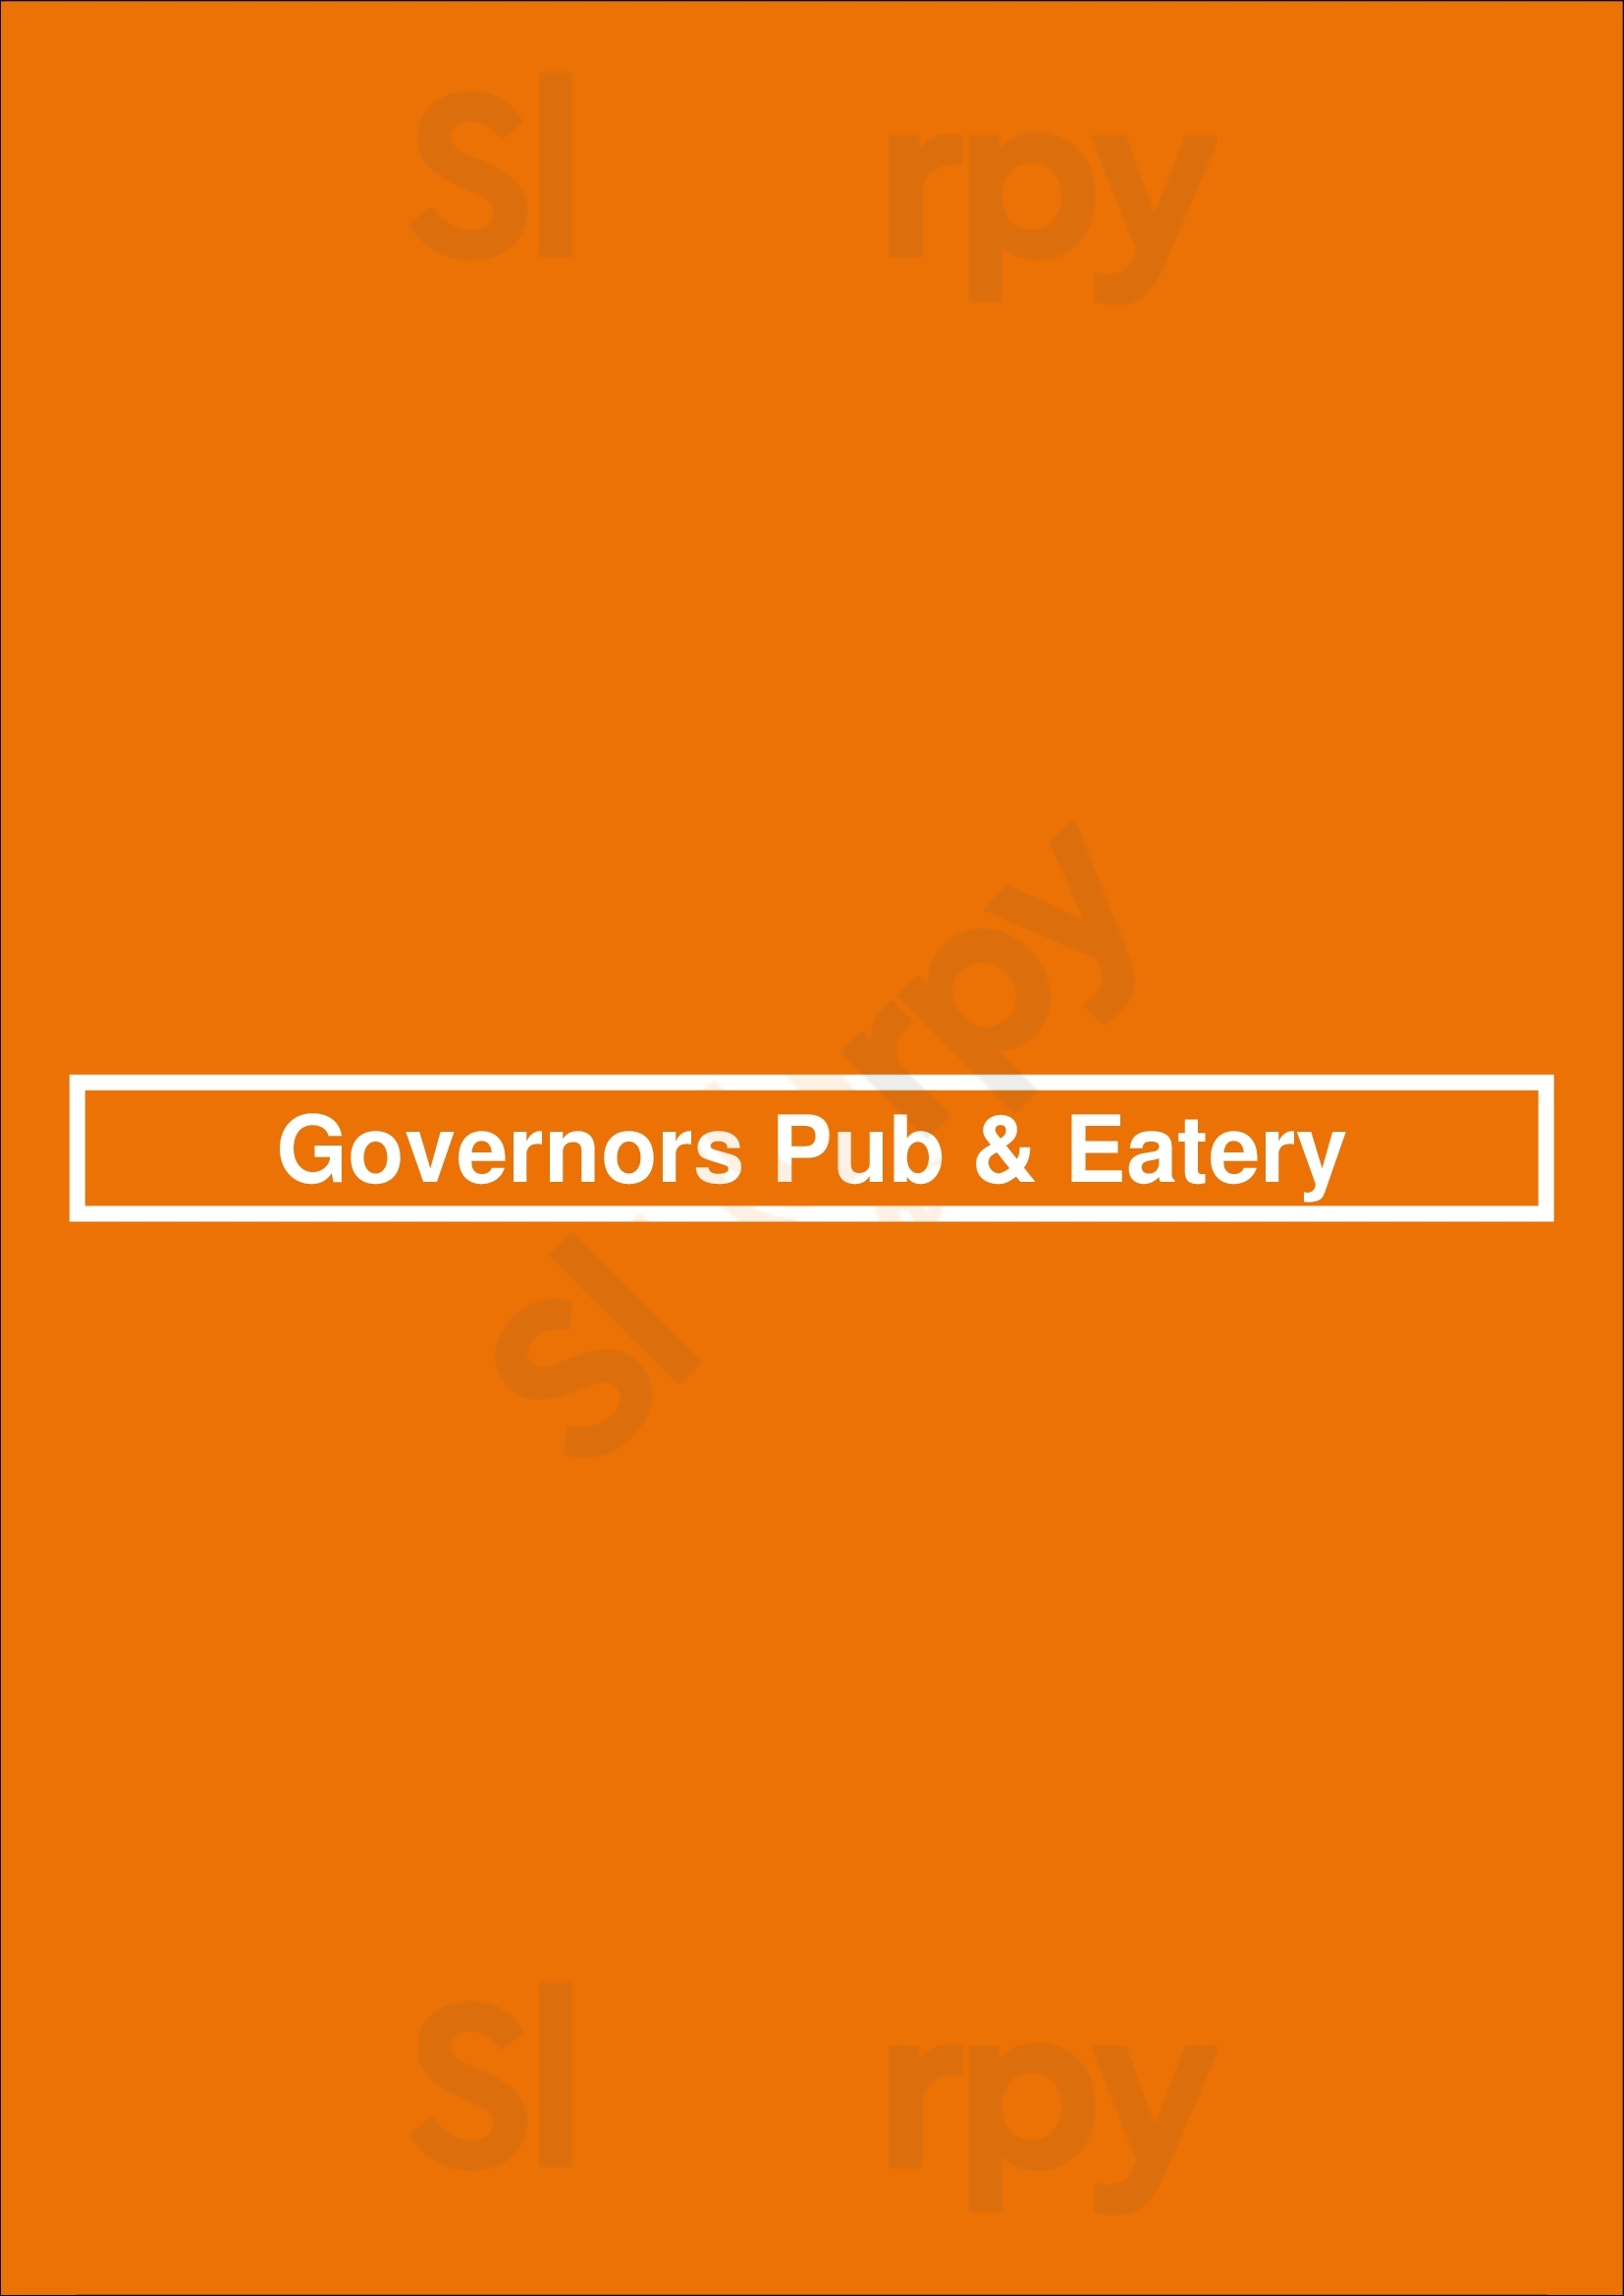 Governors Pub & Eatery Sydney Menu - 1